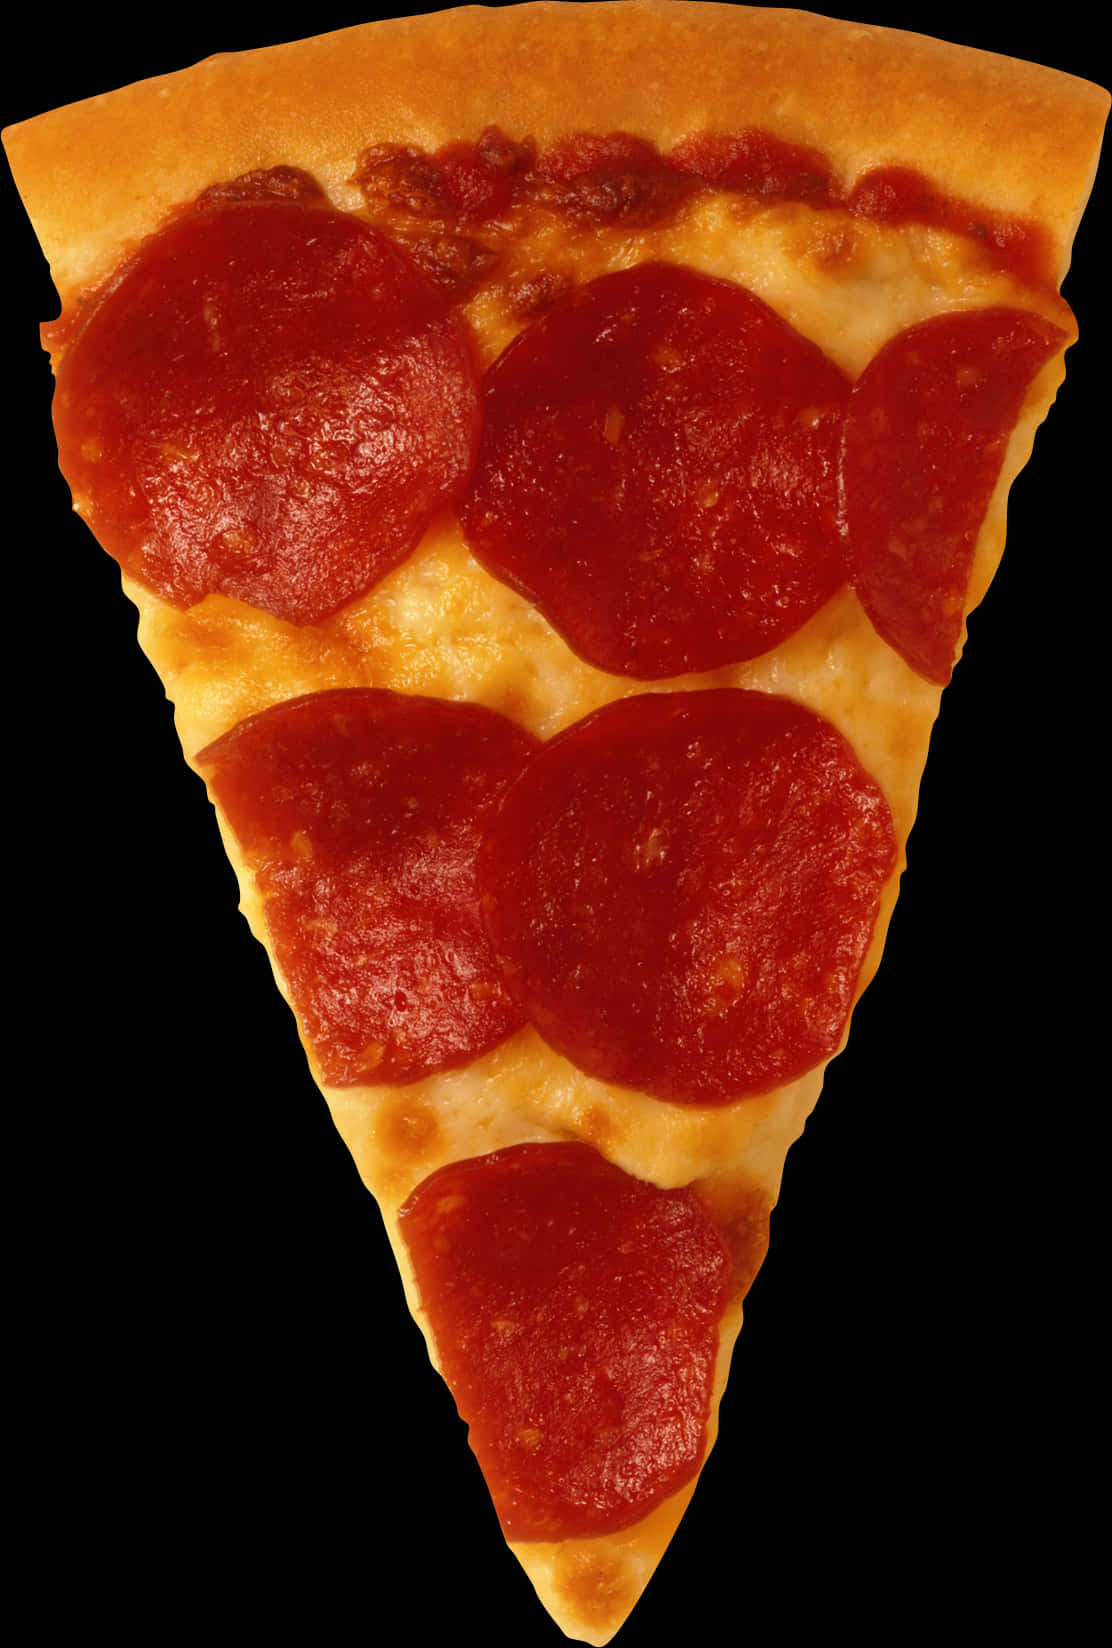 Pepperoni Pizza Slice.jpg PNG image